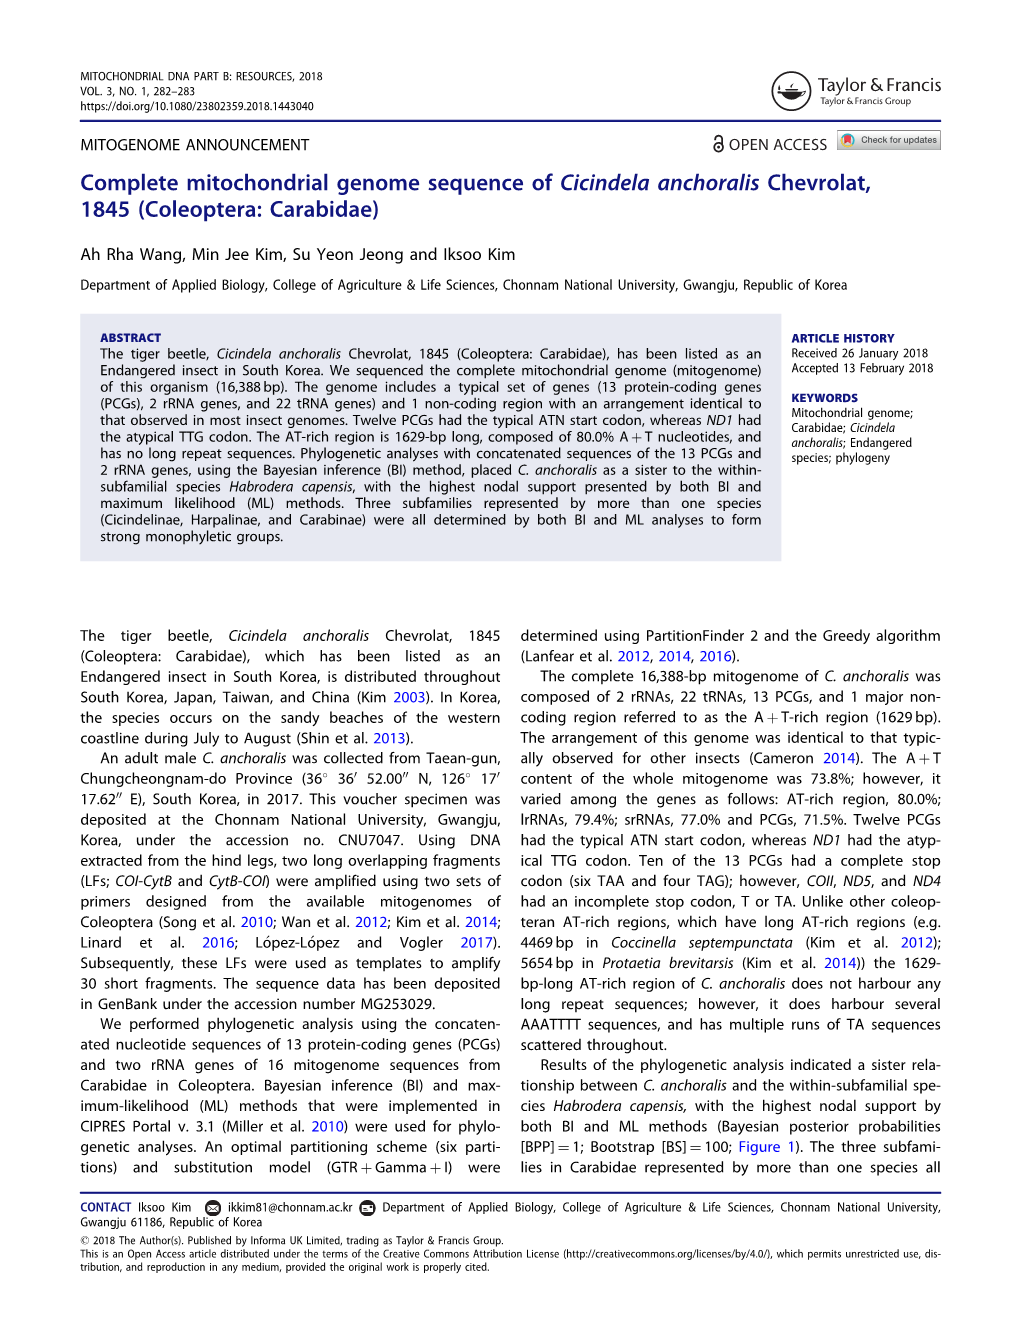 Complete Mitochondrial Genome Sequence of Cicindela Anchoralis Chevrolat, 1845 (Coleoptera: Carabidae)